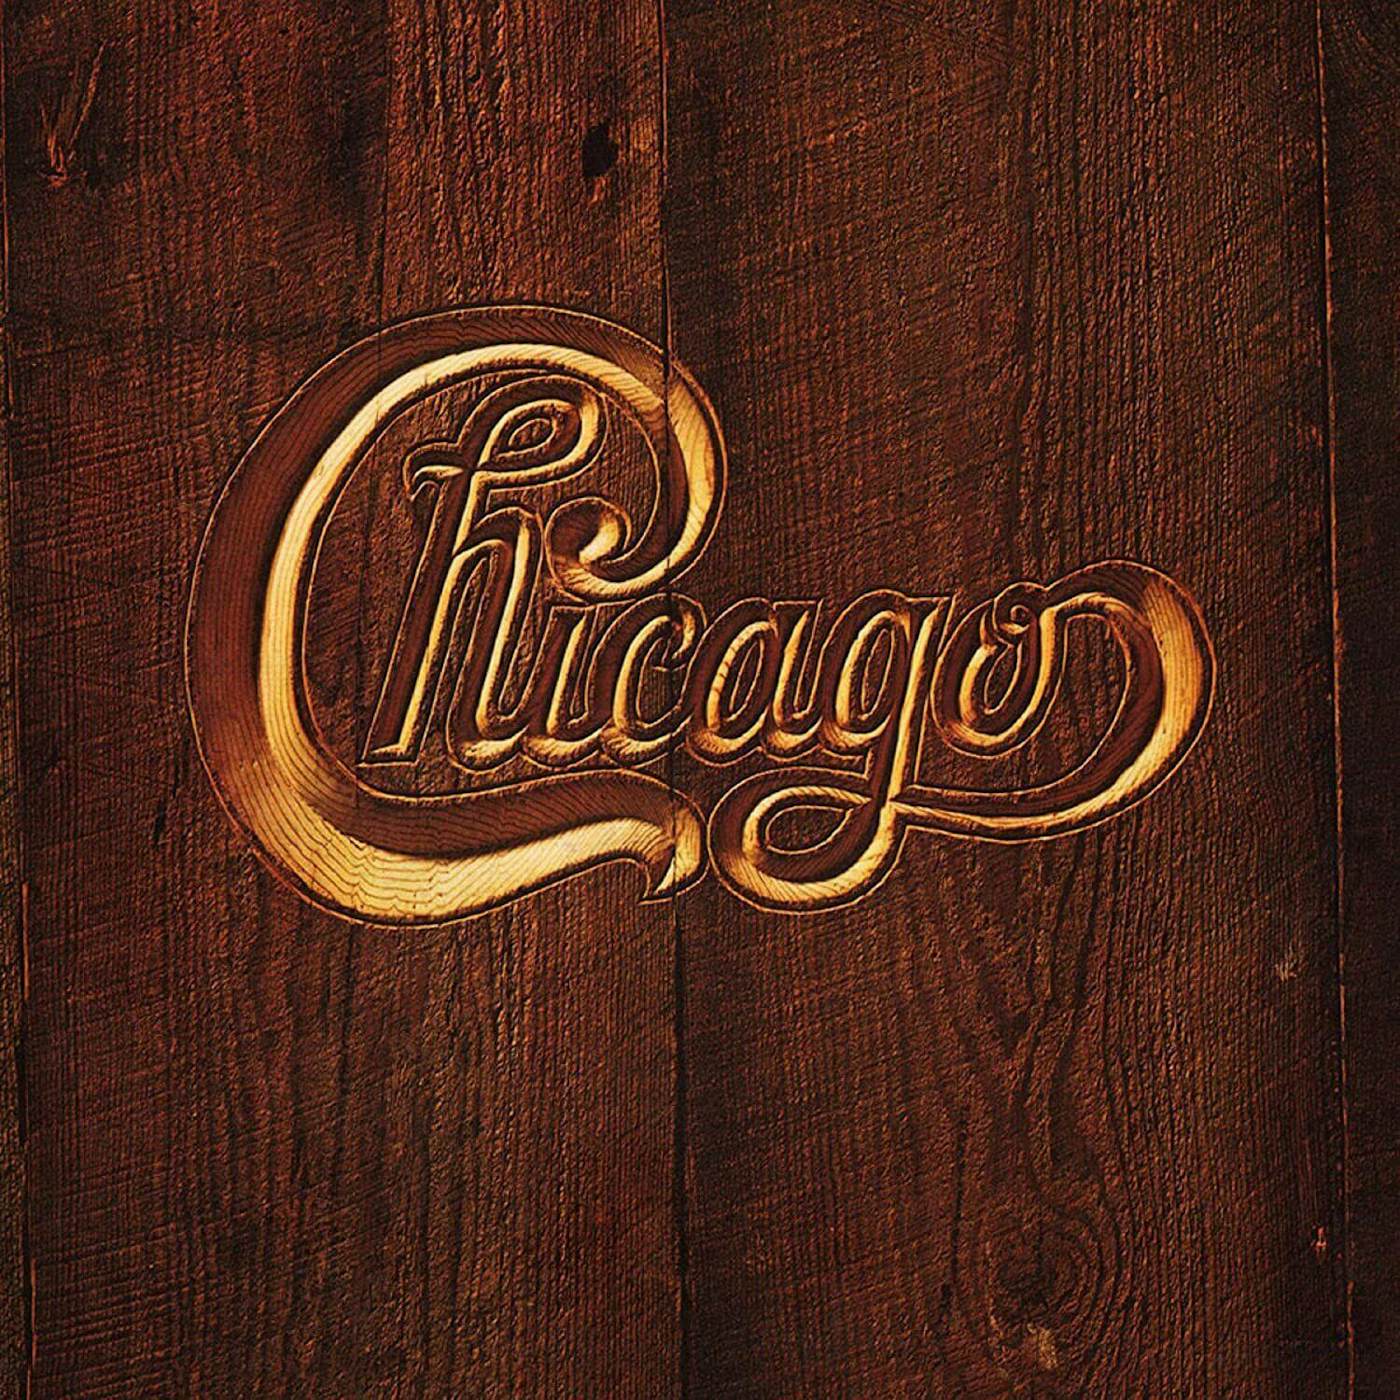  Chicago V (Gold Anniversary) Vinyl Record